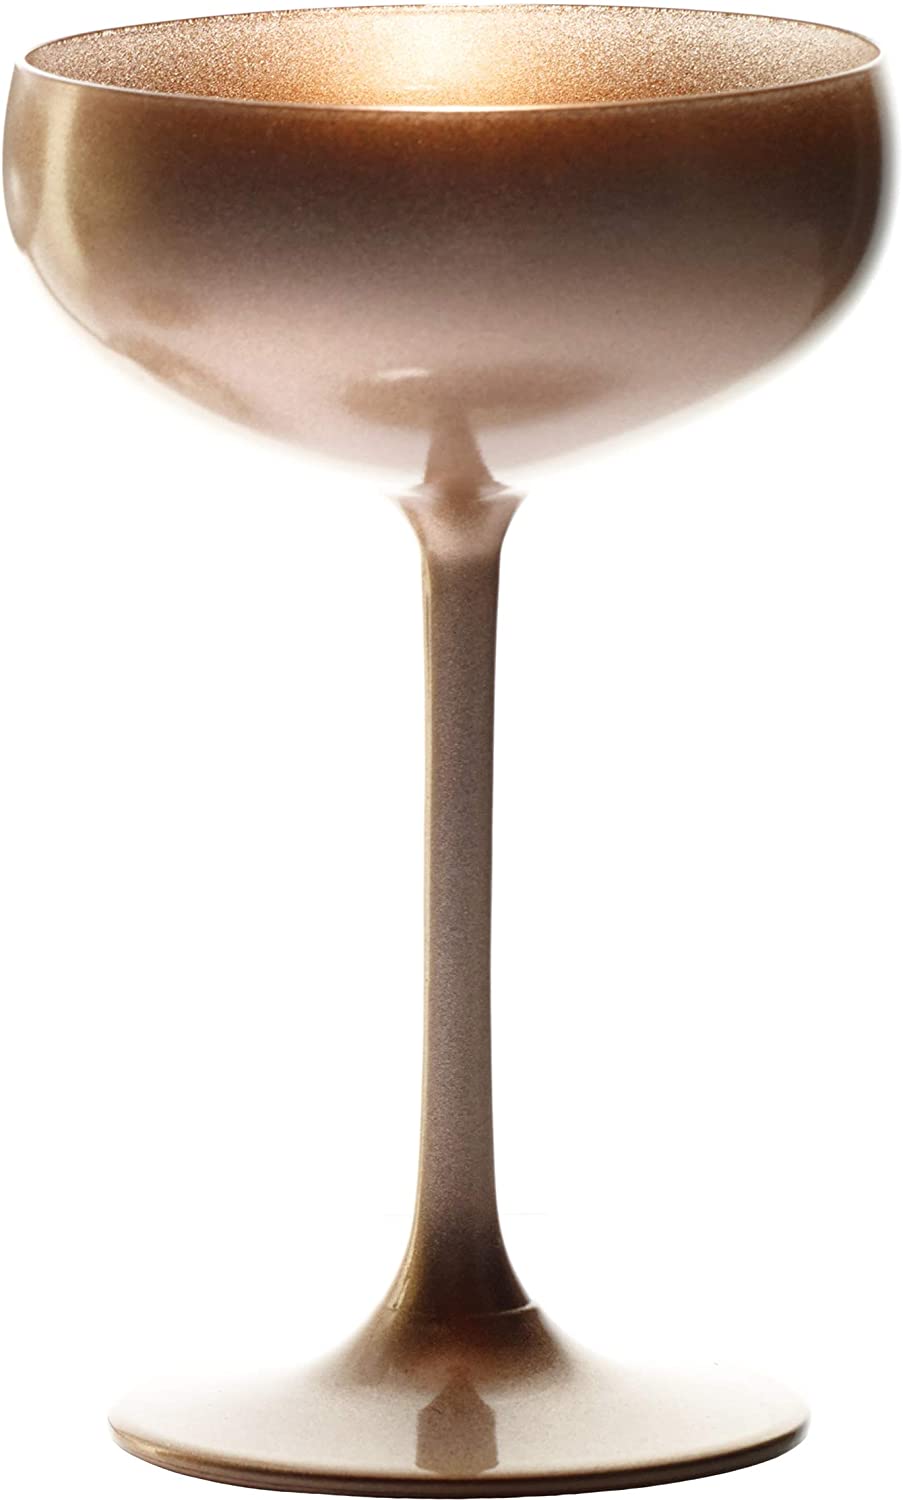 STÖLZLE LAUSITZ Elements Champagne Bowls Bronze Set of 6 I Cocktail Bowls Made of High-Quality Crystal Glass 230 ml I Champagne Glasses Set Dishwasher Safe and Shatter-resistant I Coupe Glasses